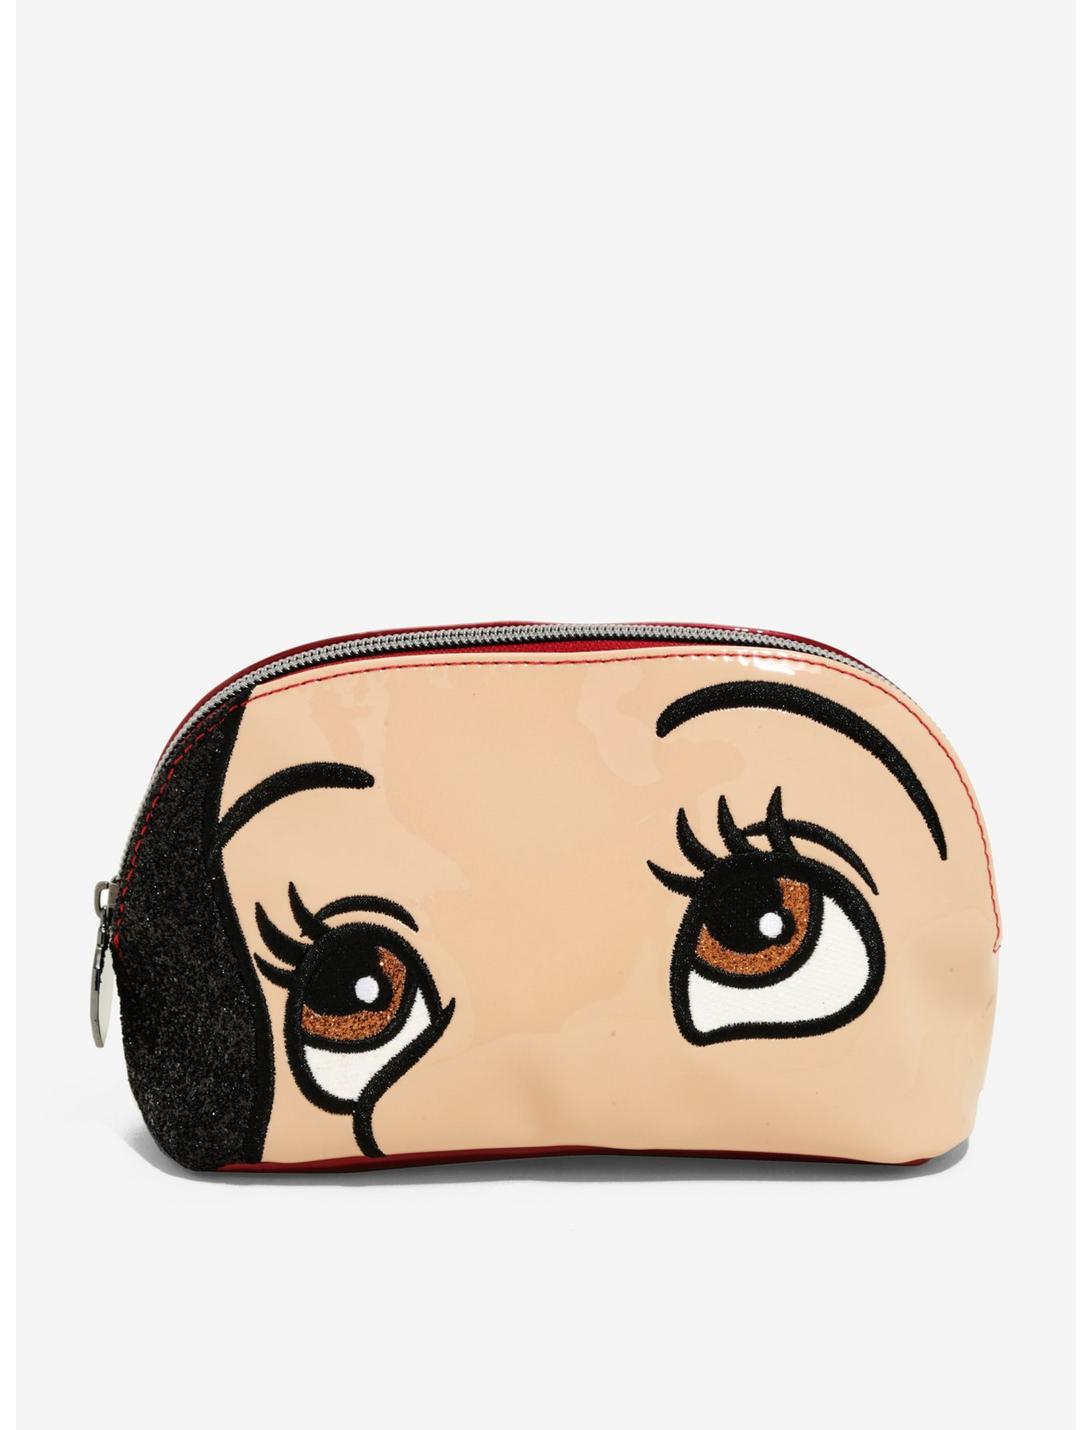 Danielle Nicole Snow White Eyes Makeup Bag | BoxLunch